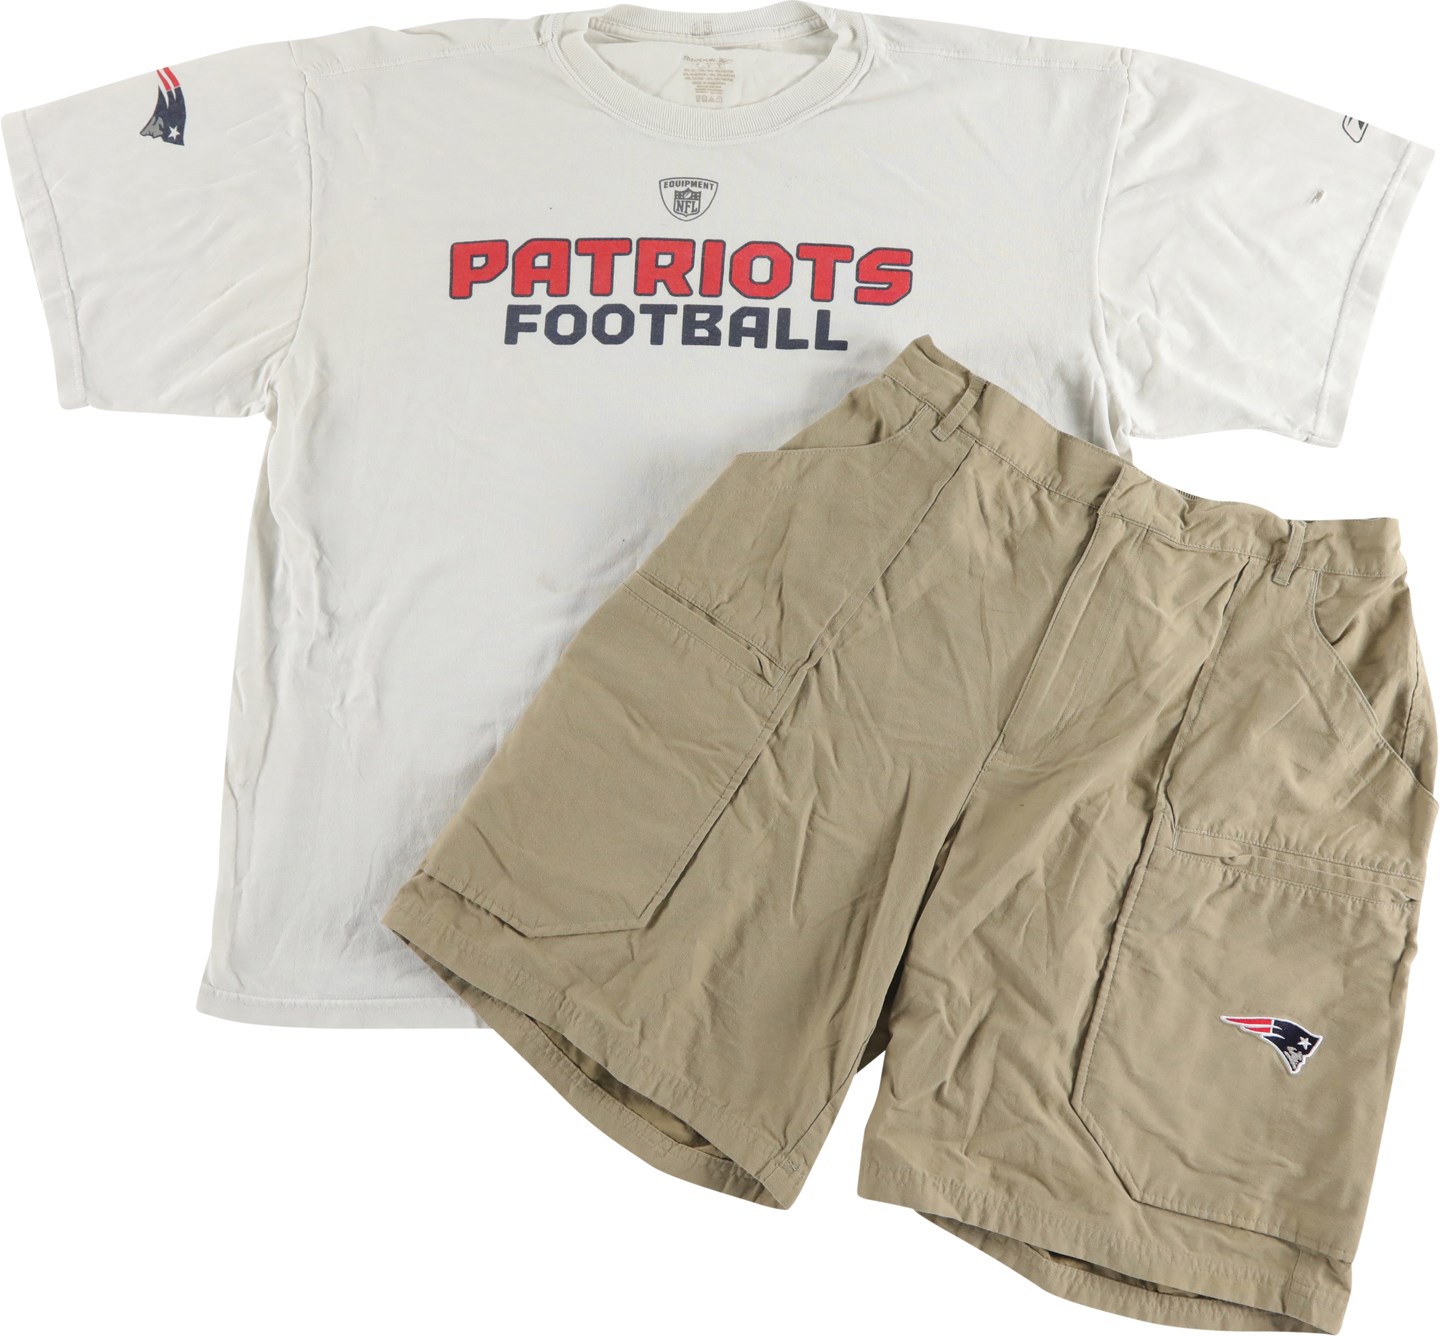 - Rare Bill Belichick Worn New England Patriots Practice Shirt and Shorts